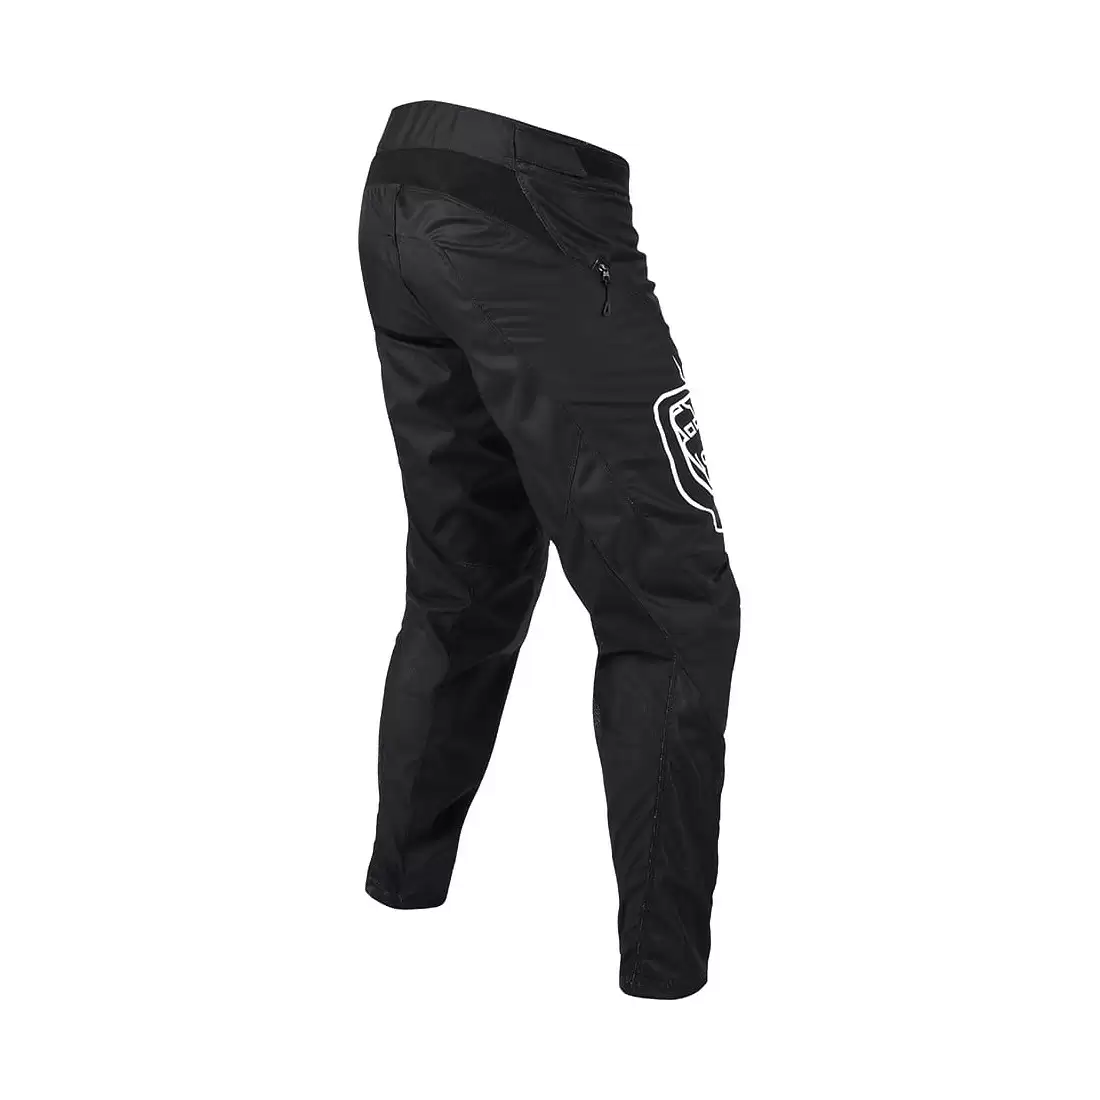 DH/Enduro Sprint MTB Long Pants Black Size XL #1